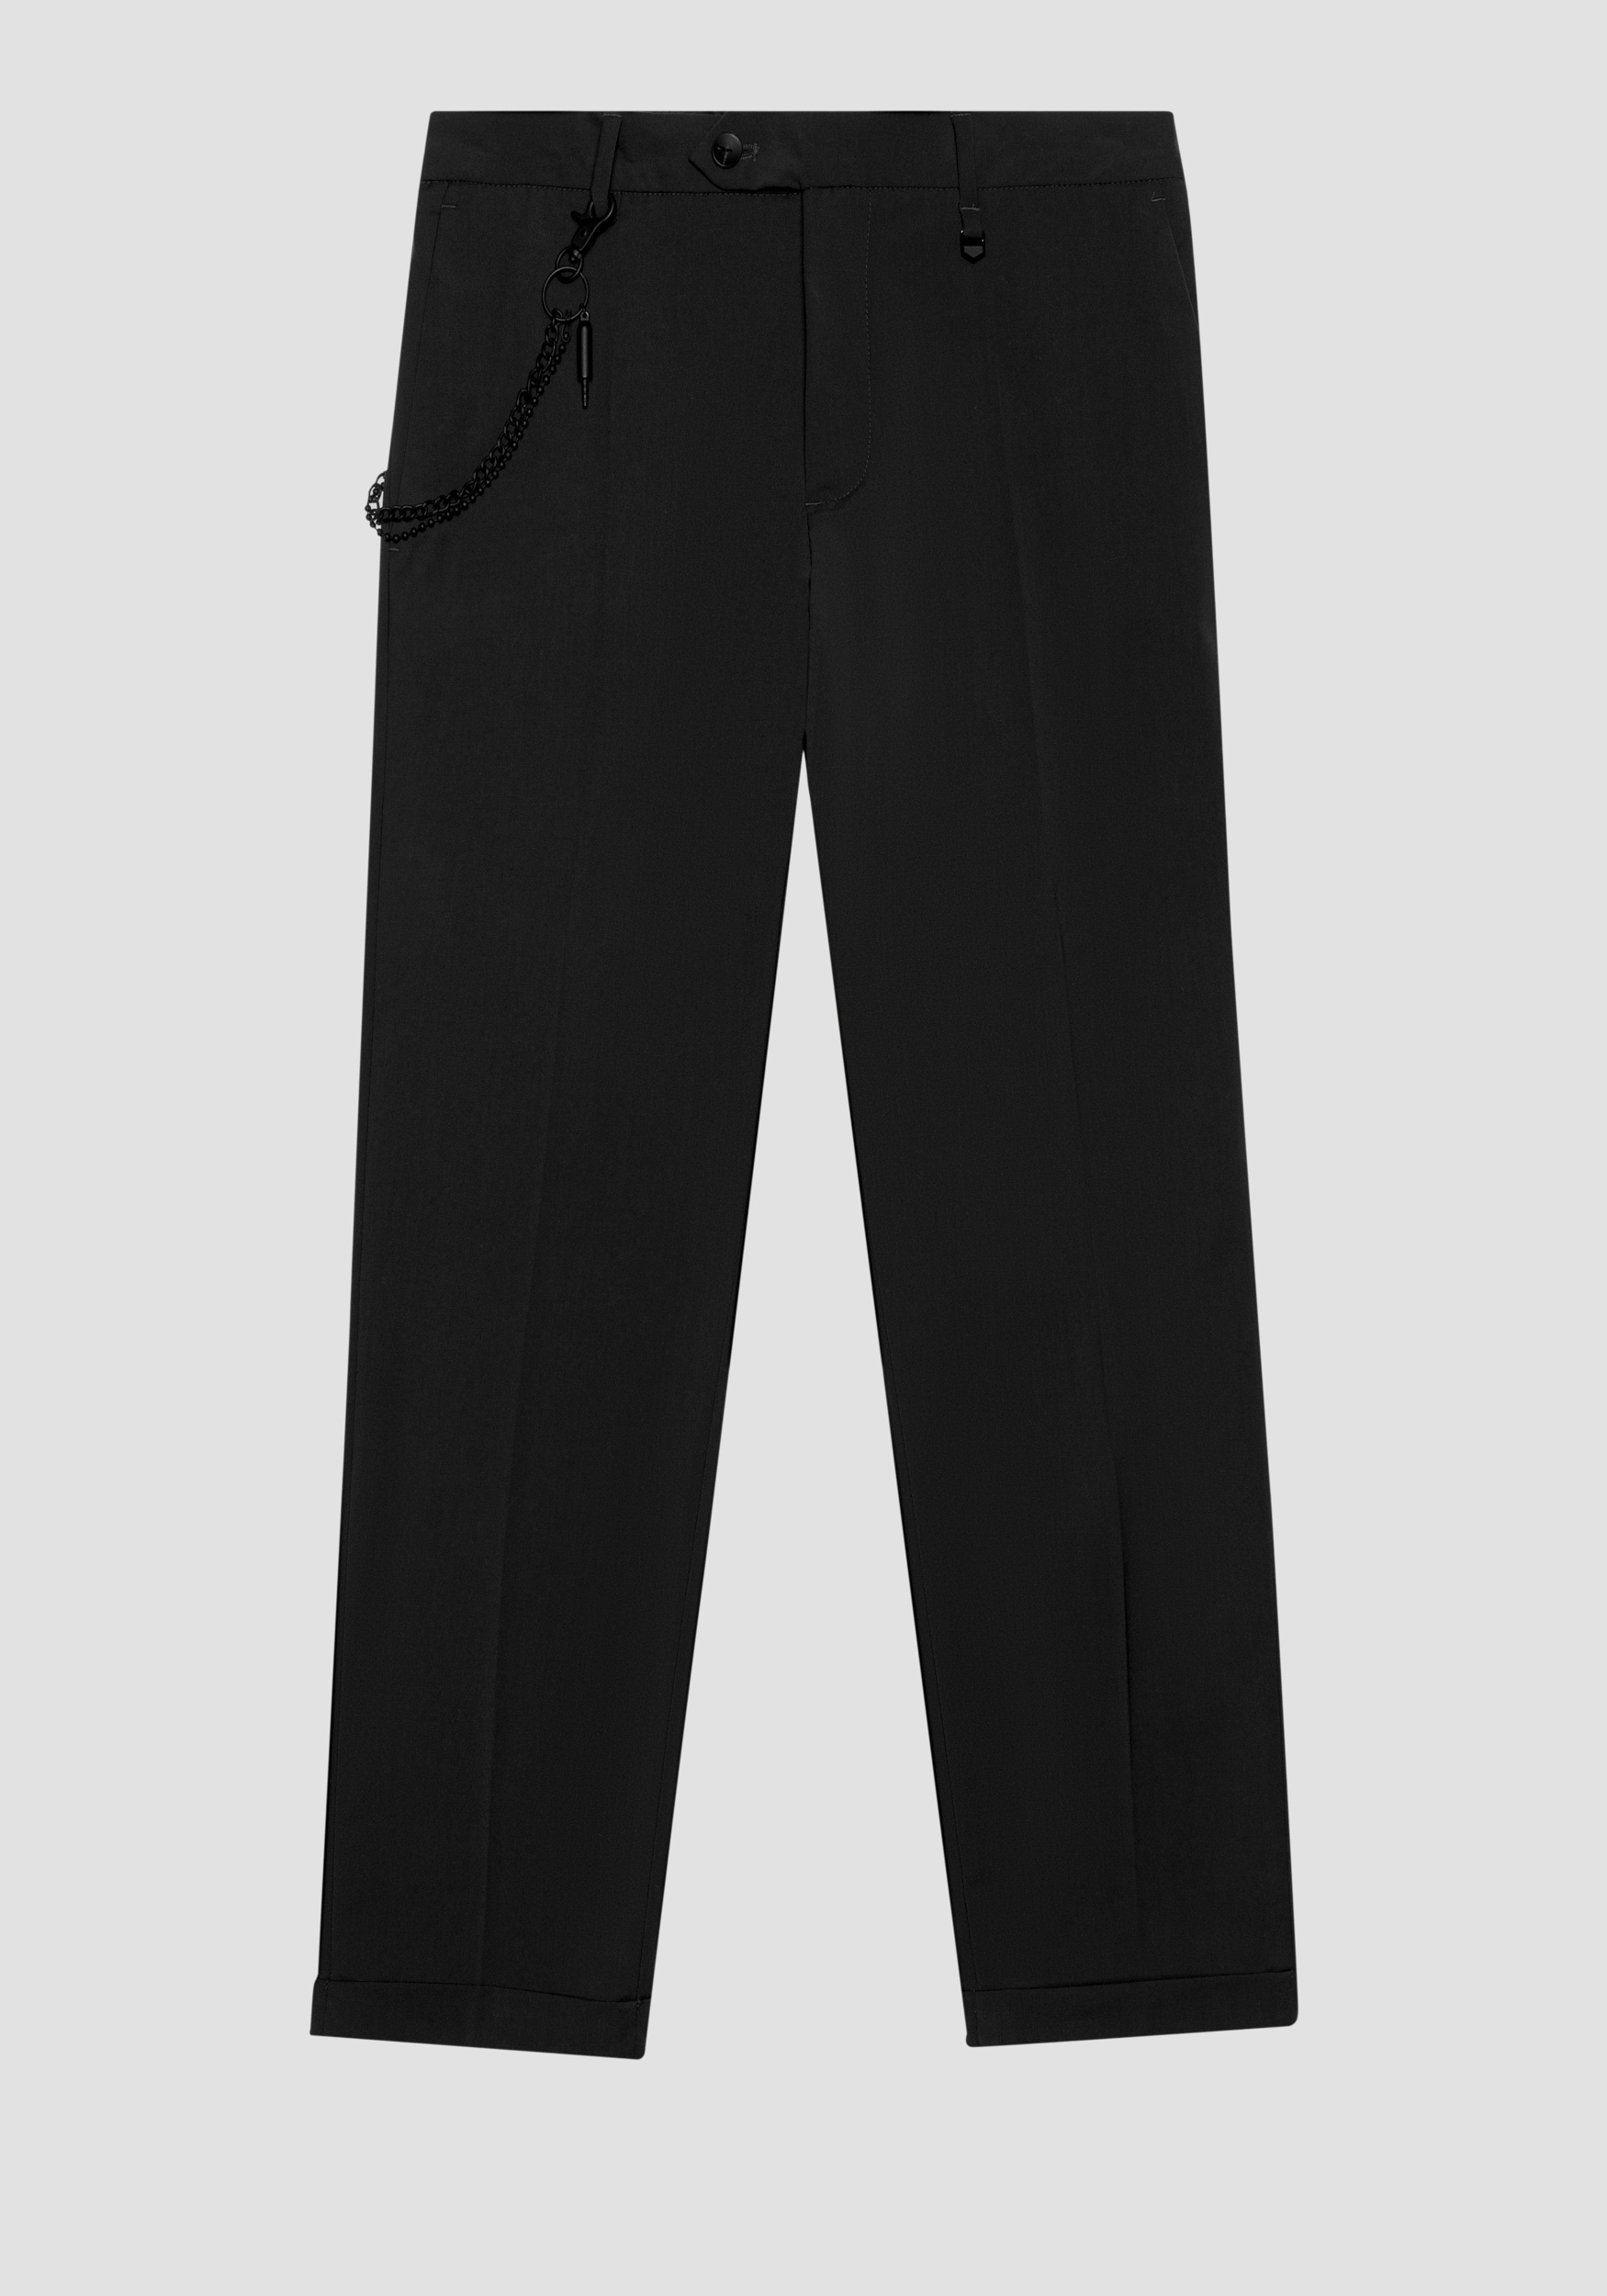 Antony Morato Men's Trousers ⋆ Slim Fit, Casual, Joggers ⋆ Online Shop